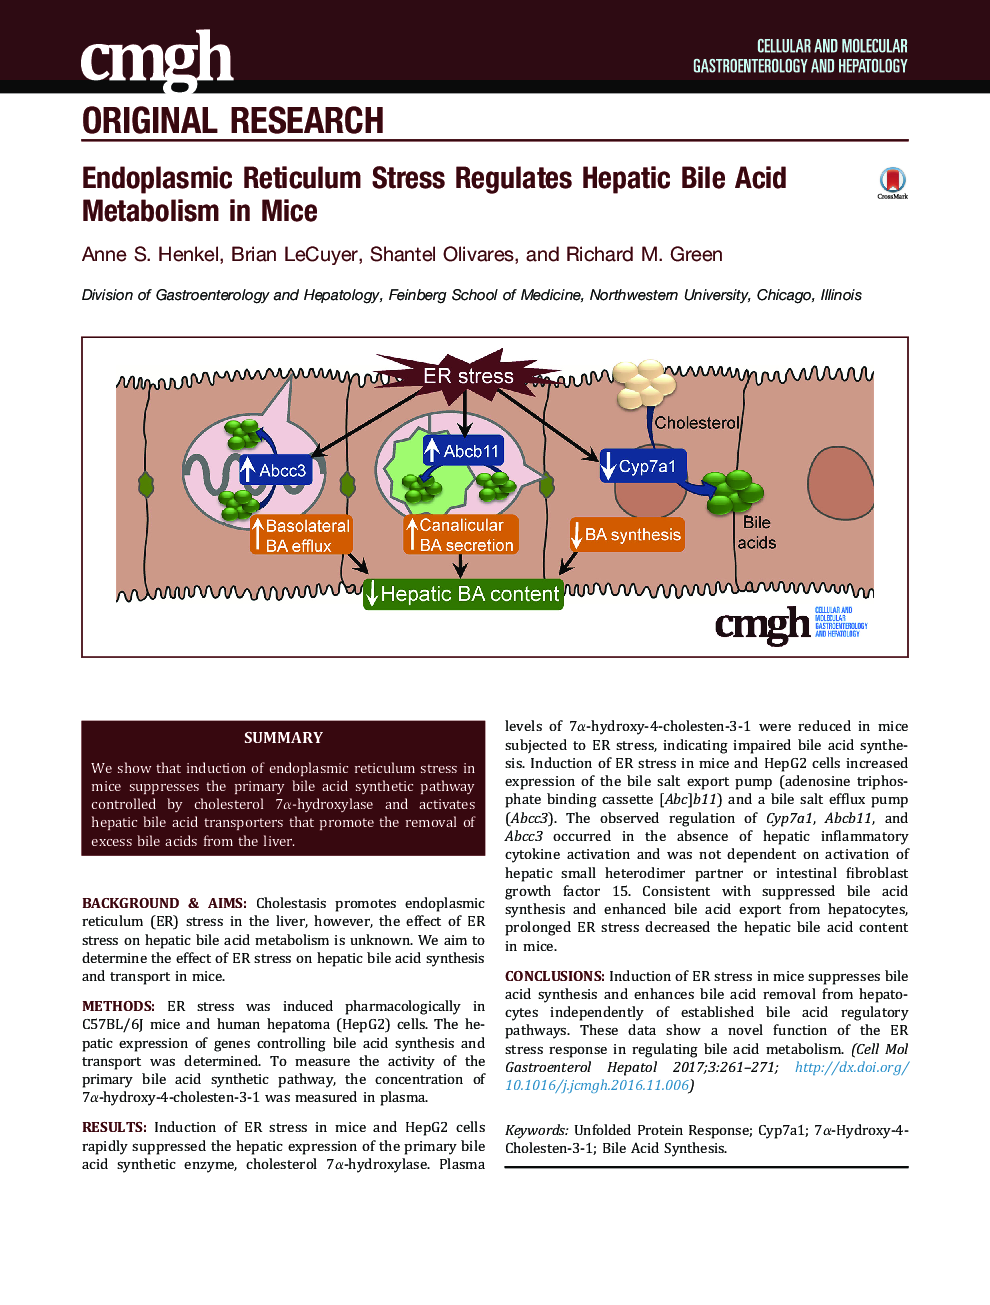 Endoplasmic Reticulum Stress Regulates Hepatic Bile Acid Metabolism in Mice